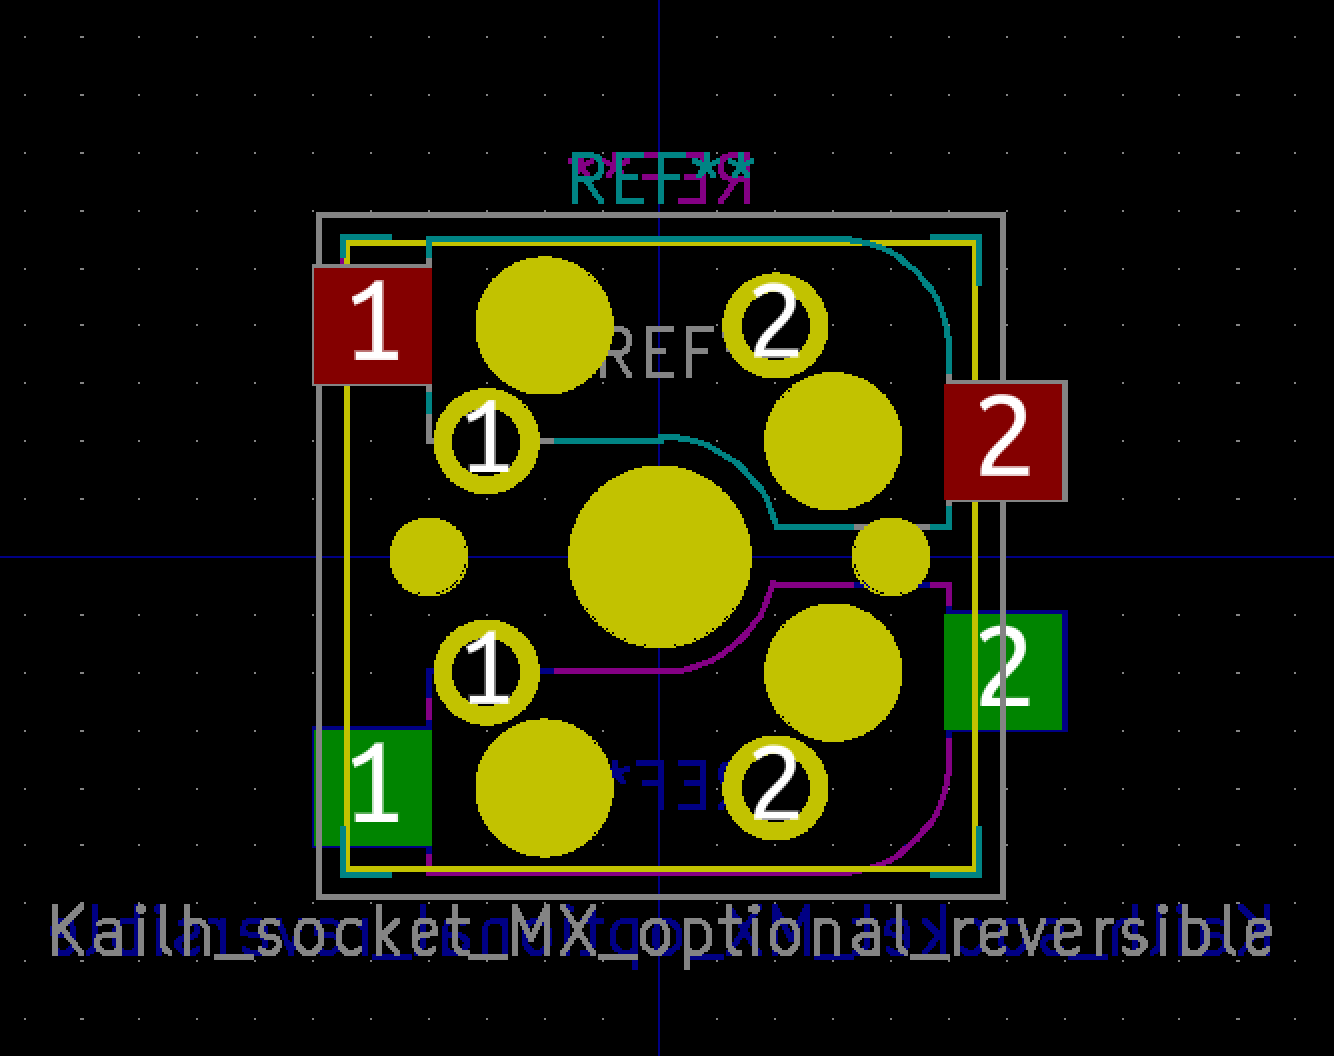 Kailh_socket_MX_optional_reversible